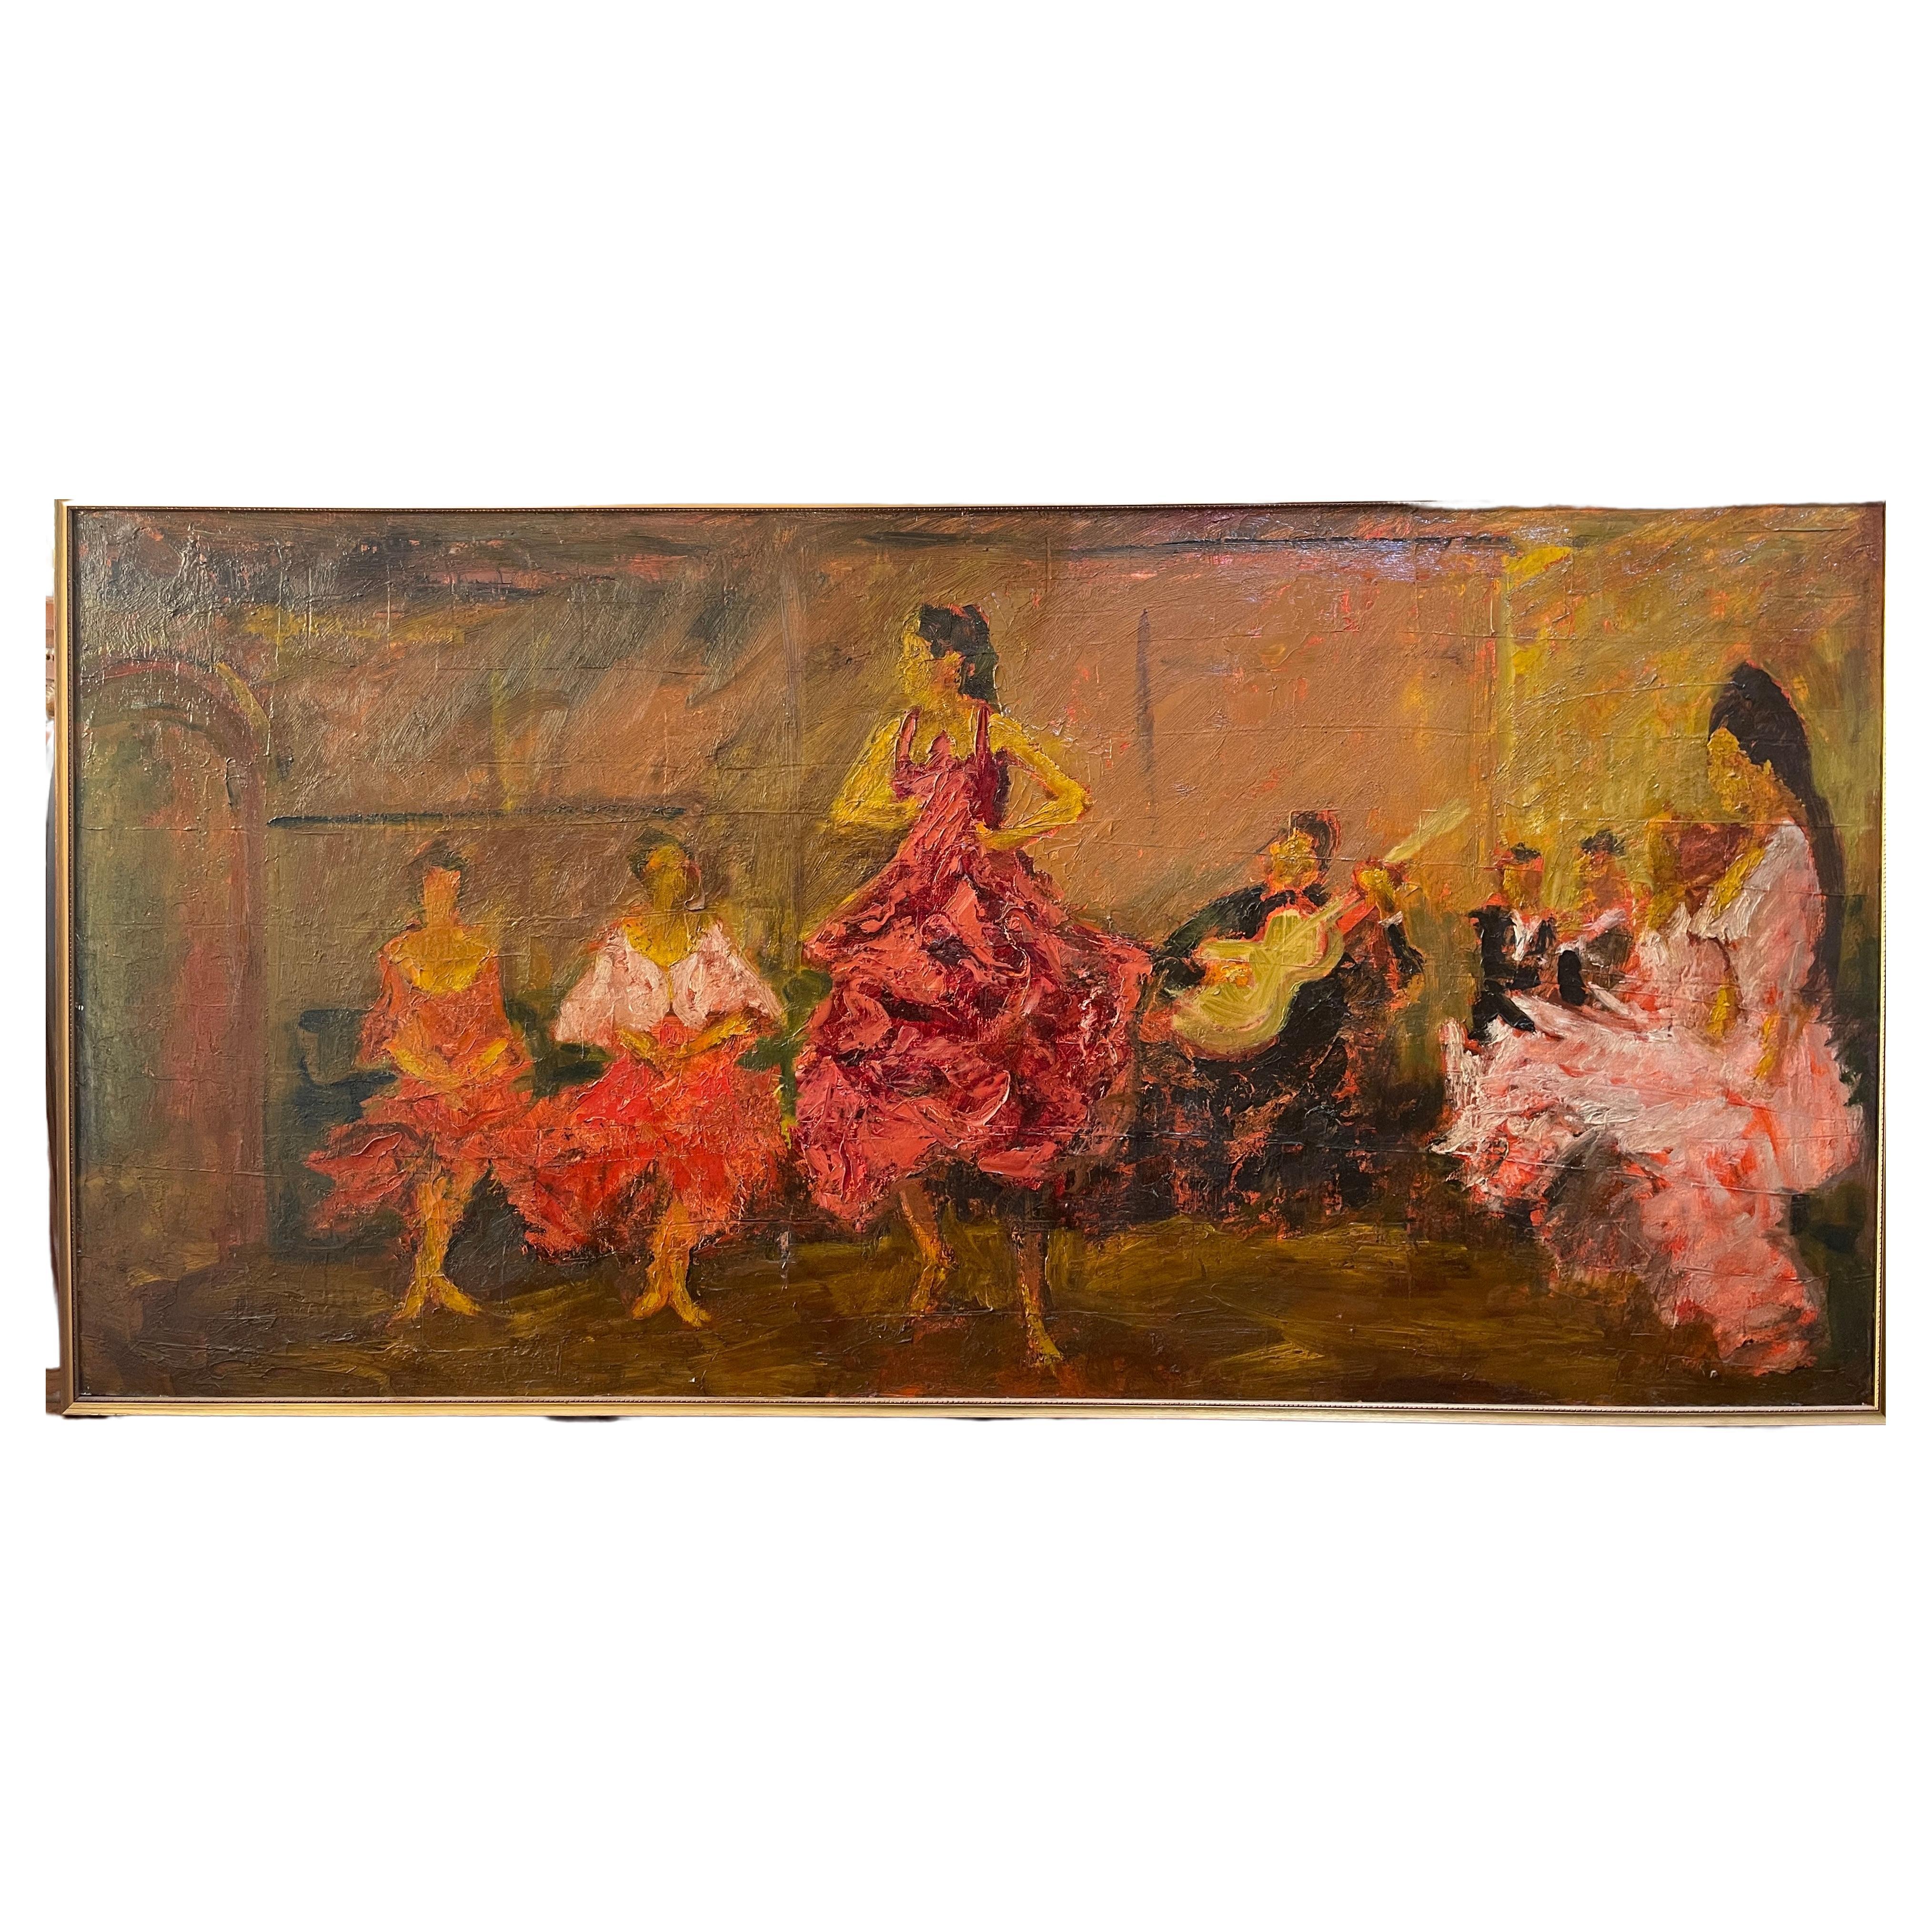 Modern oil painting on canvas, dance scene, 20th century, impressionist